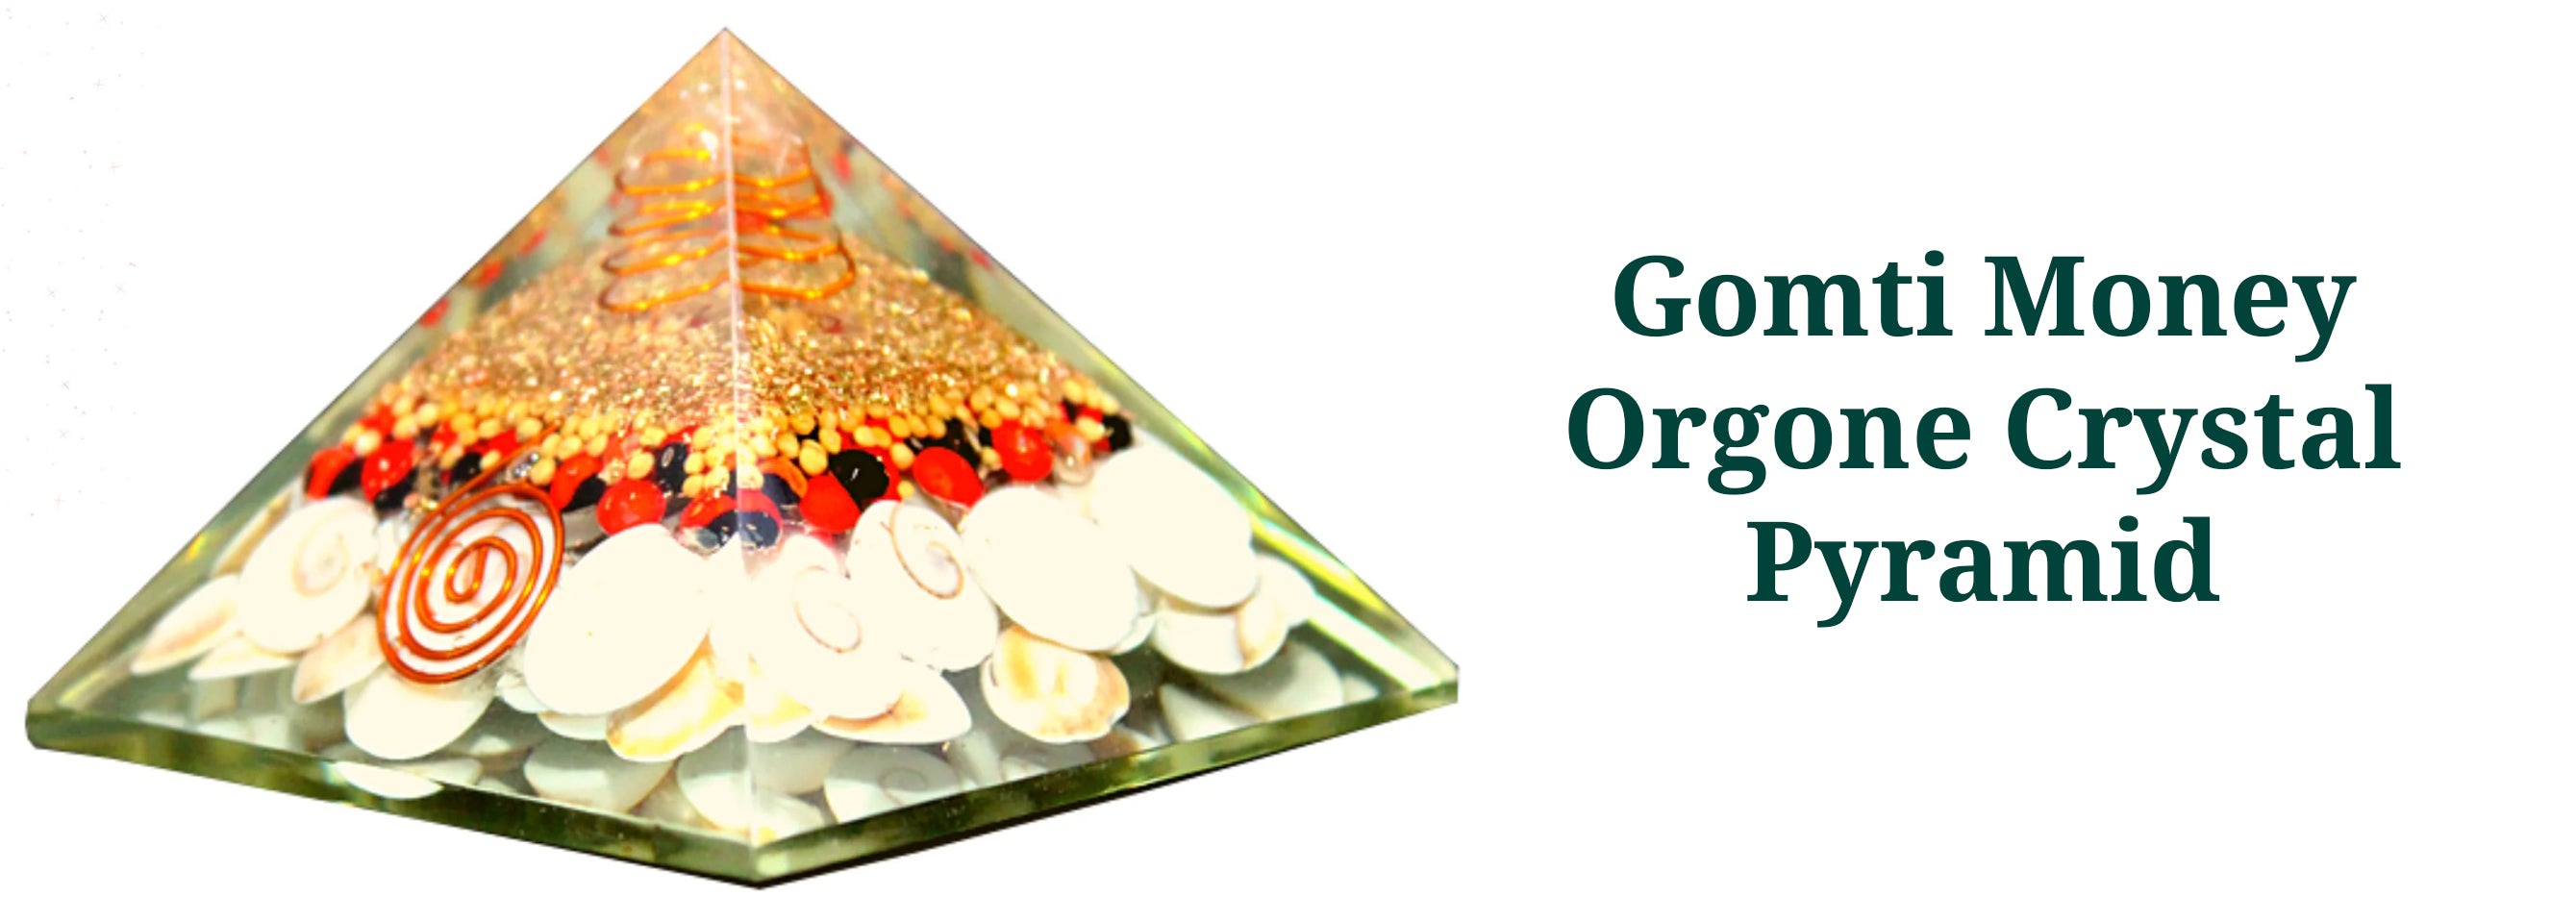 Gomti Money Orgone Crystal Pyramid for Money, Prosperity, and Growth